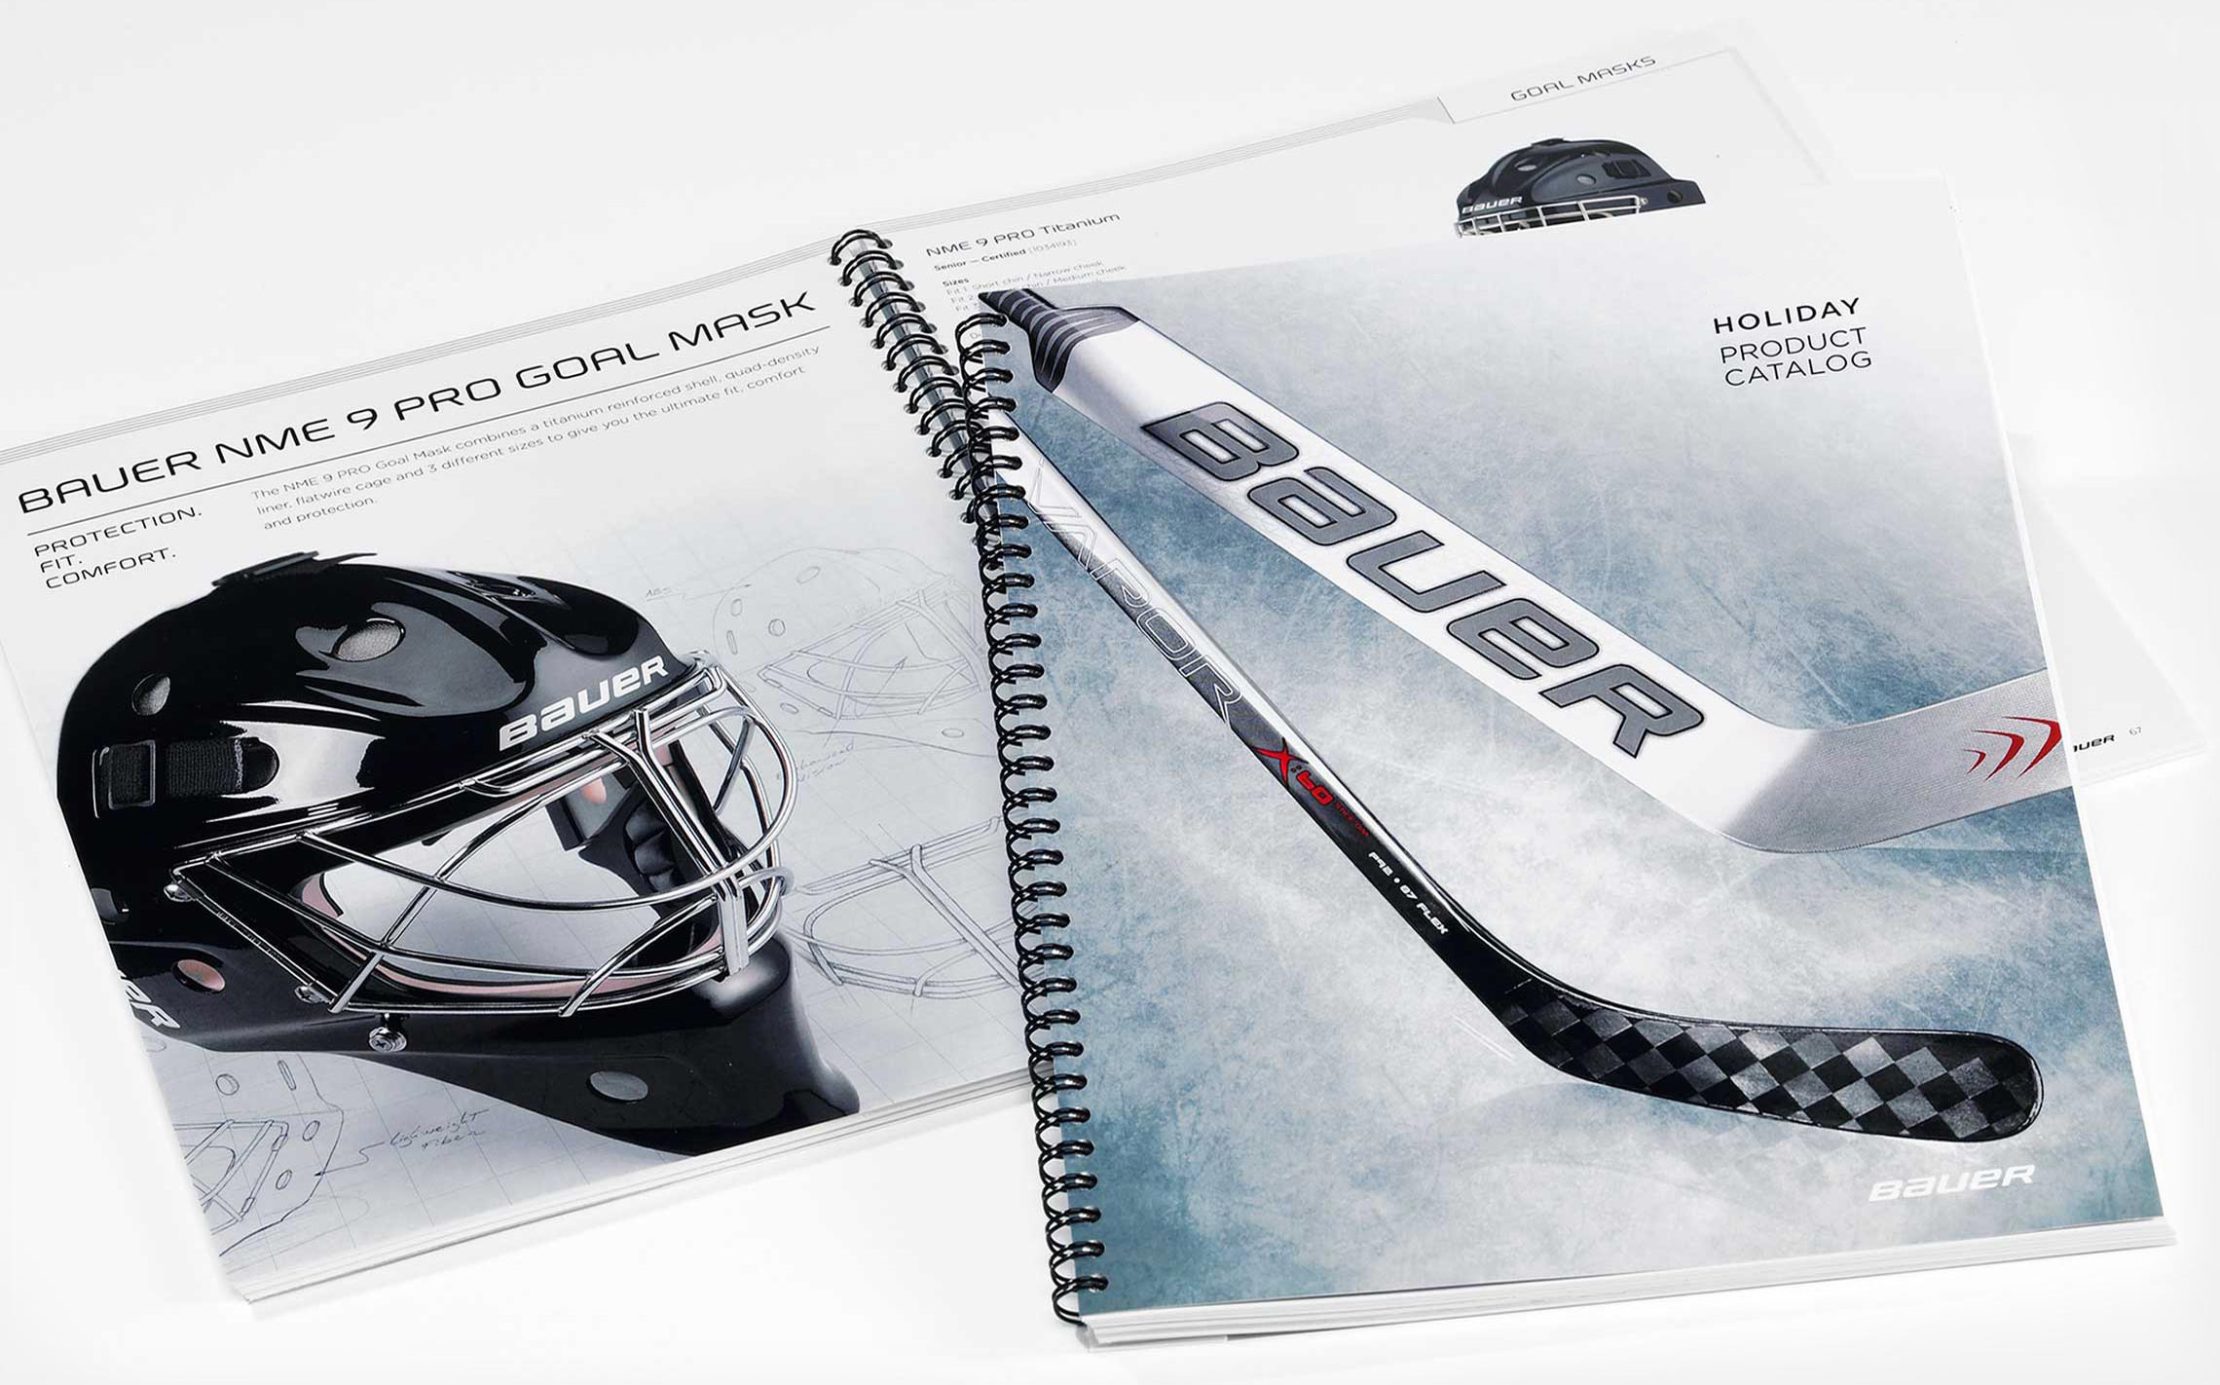 Bauer Hockey catalog spread